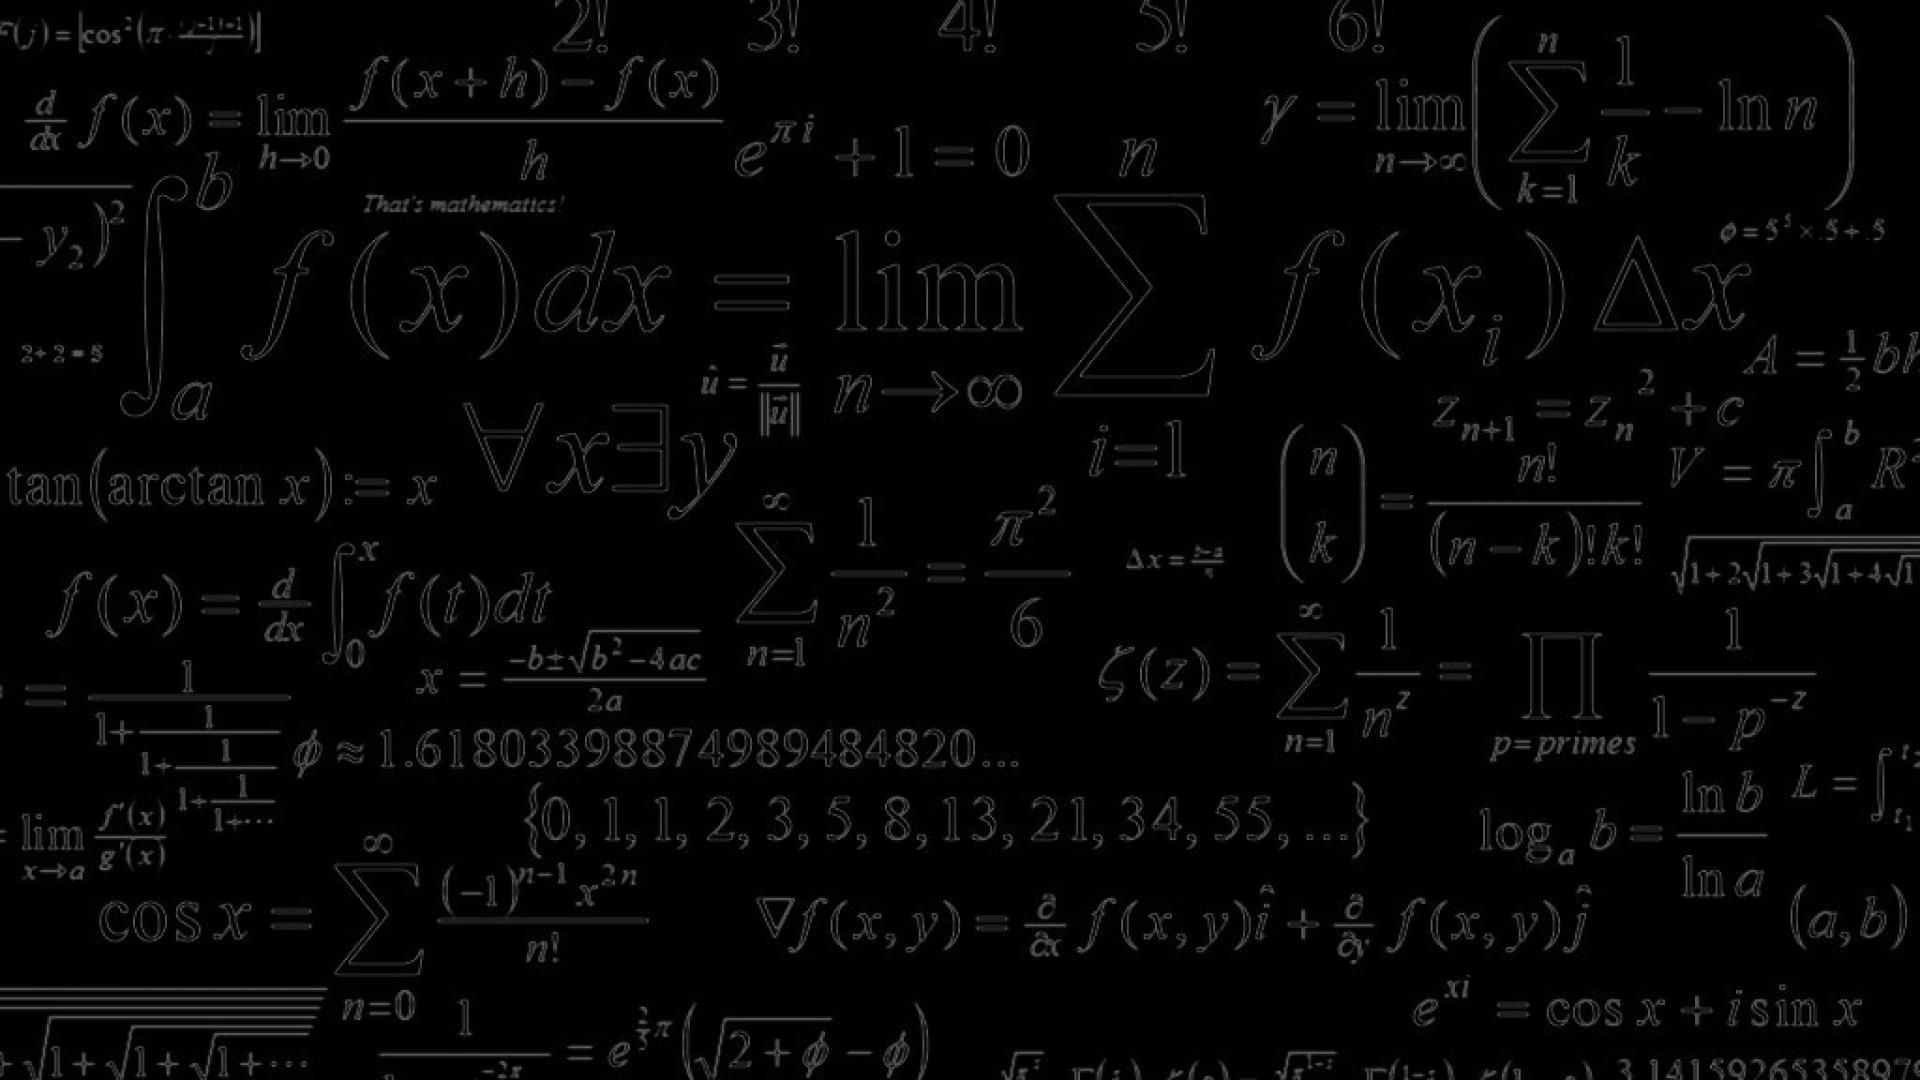 Math equations on a black background - Math